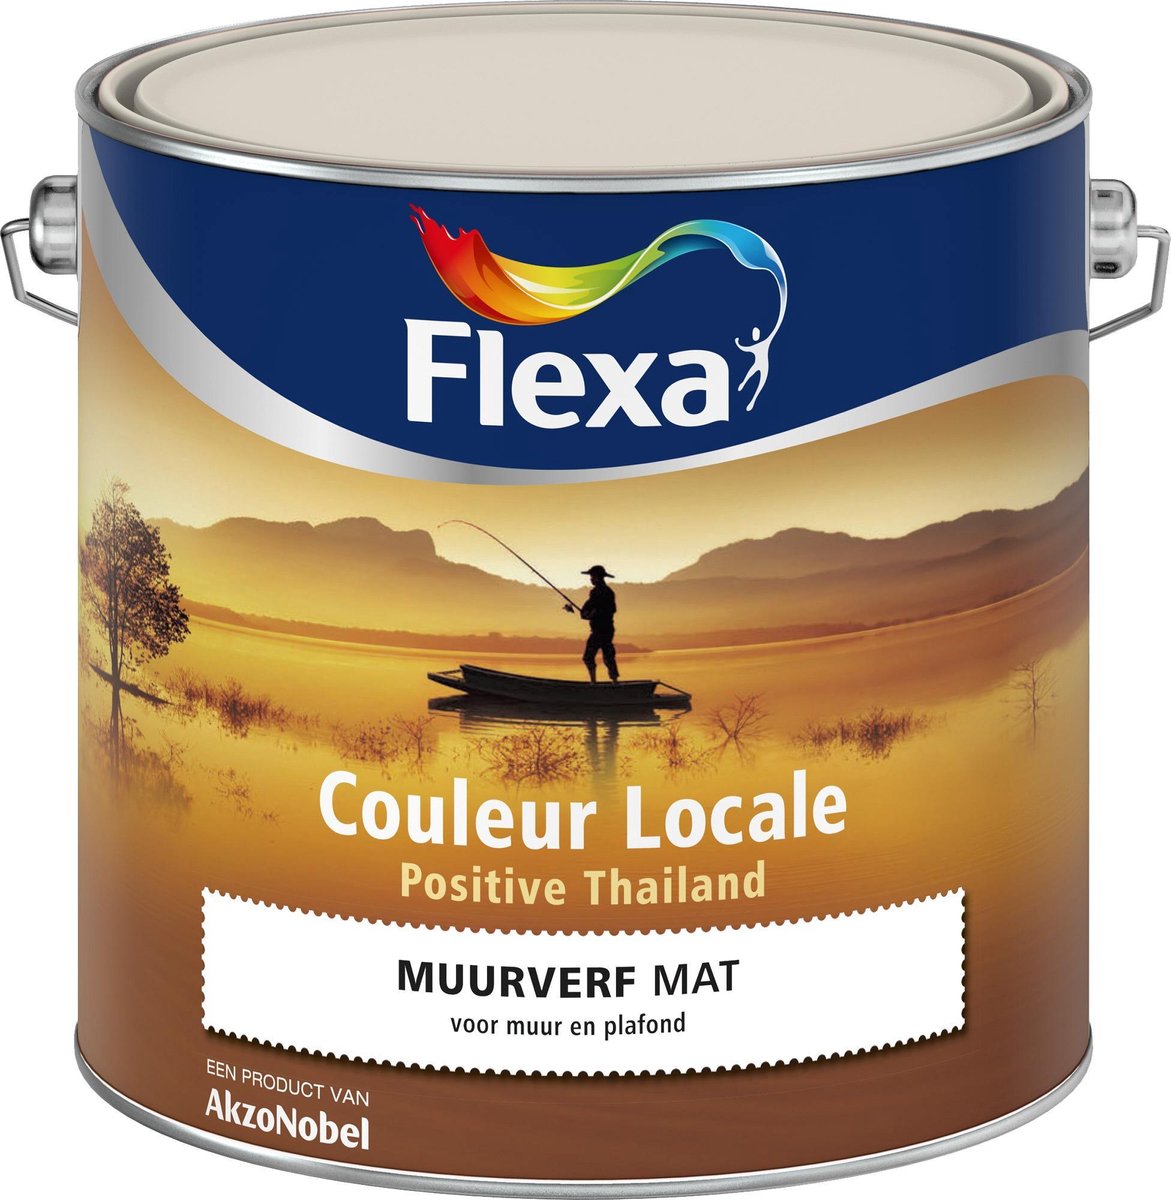 Flexa Couleur Locale - Muurverf Mat - Positive Thailand Breeze - 4075 - 2,5 liter